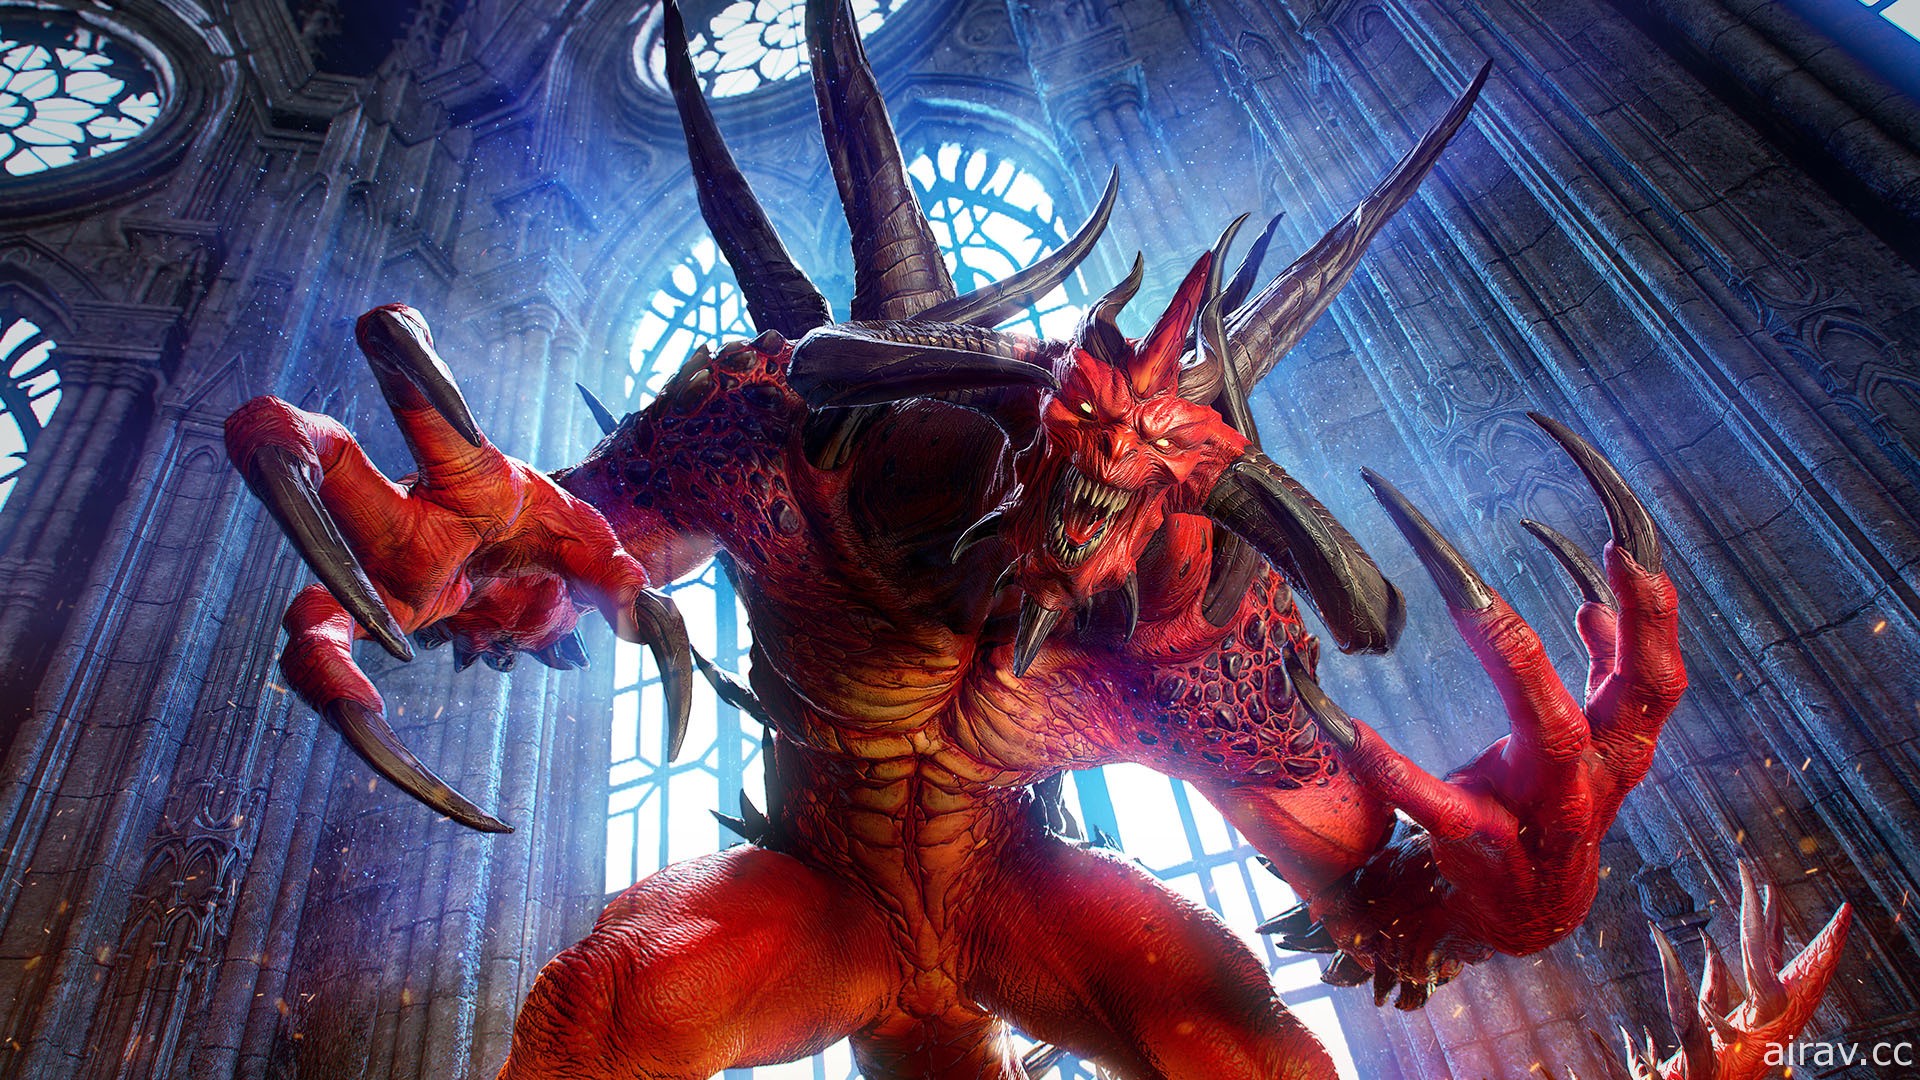 AMD Radeon Software Adrenalin 释出 21.9.2 版 为《暗黑破坏神 2》等游戏提供支援